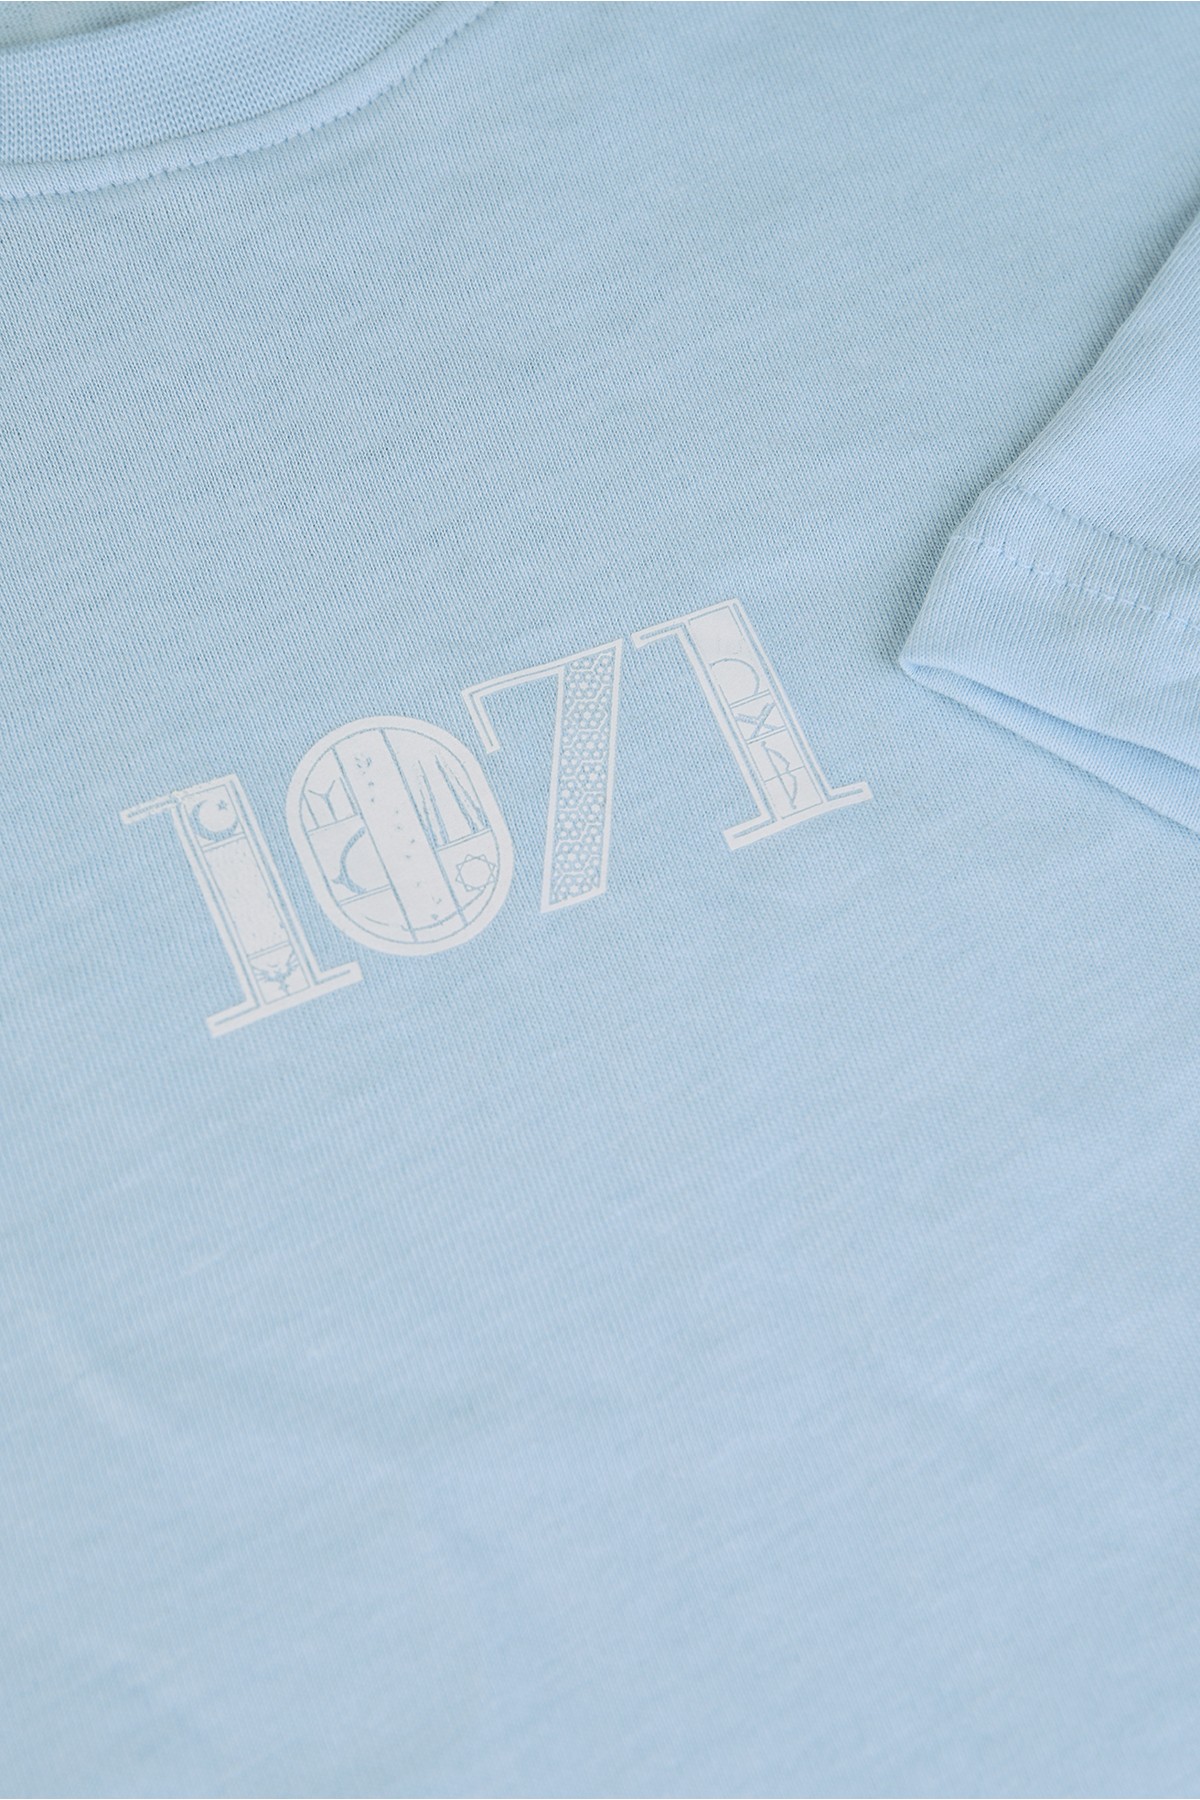 Yeni Sezon 1071 Tasarım Pamuk Bisiklet Yaka Mavi T-shirt 23'